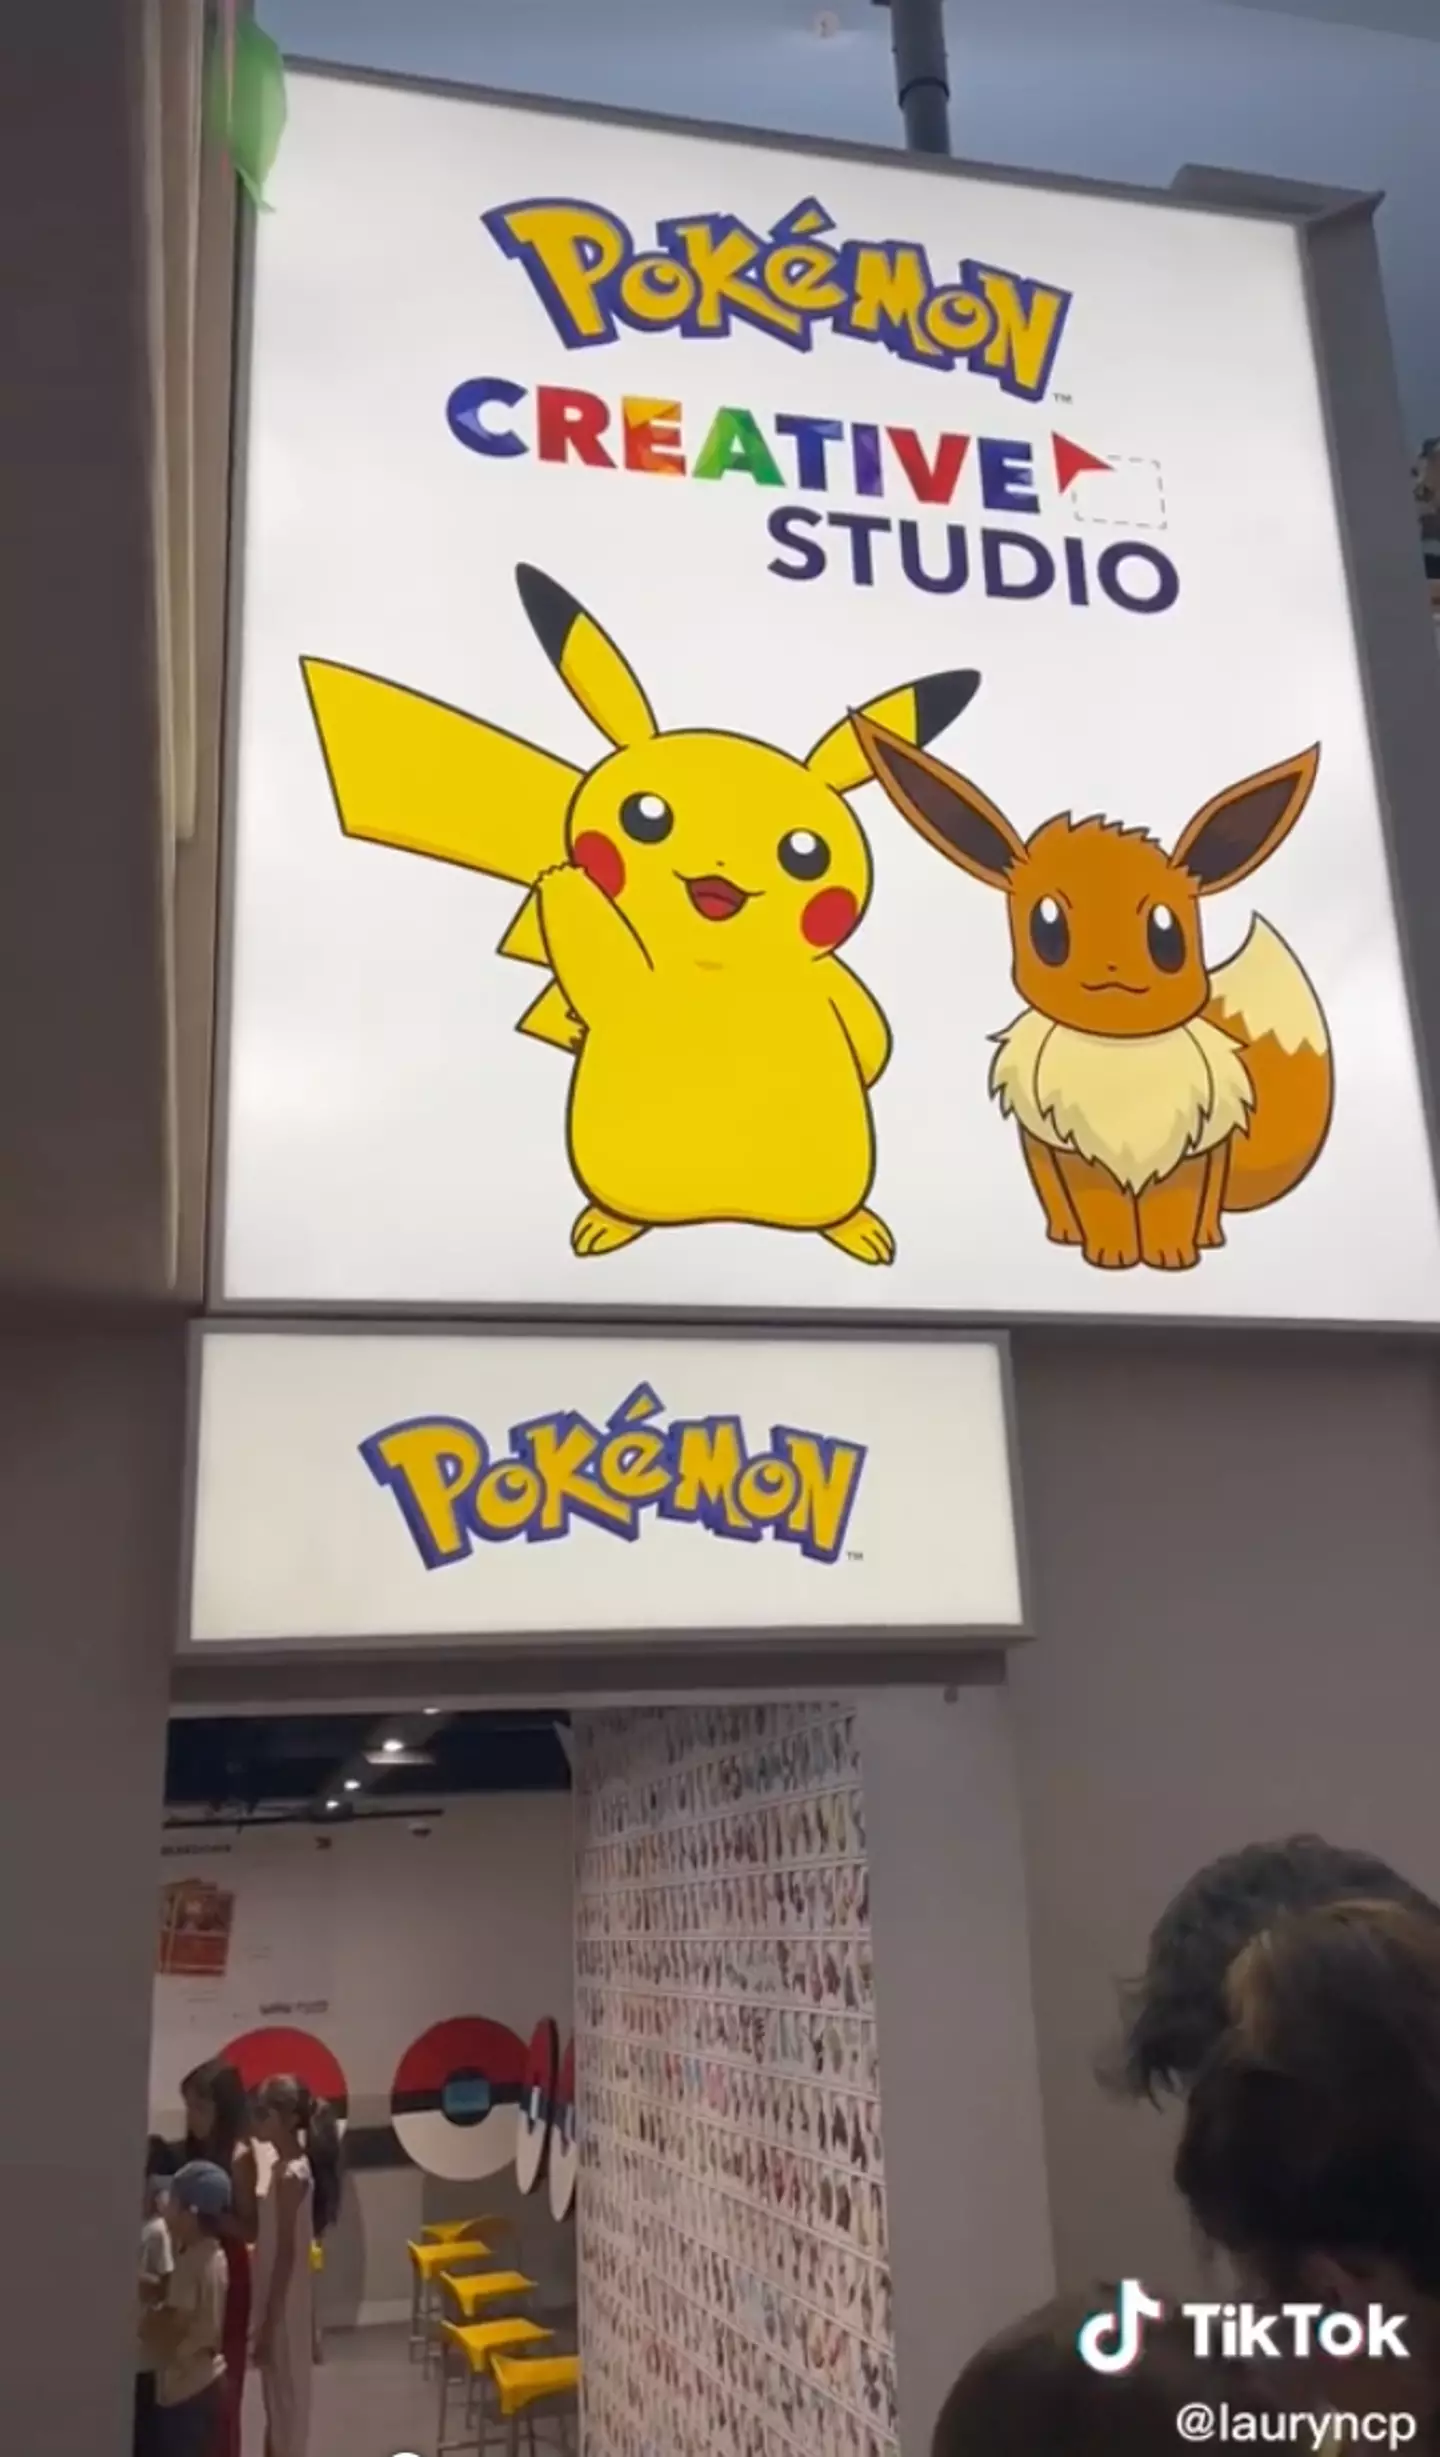 Kids can even design their own Pokémon.